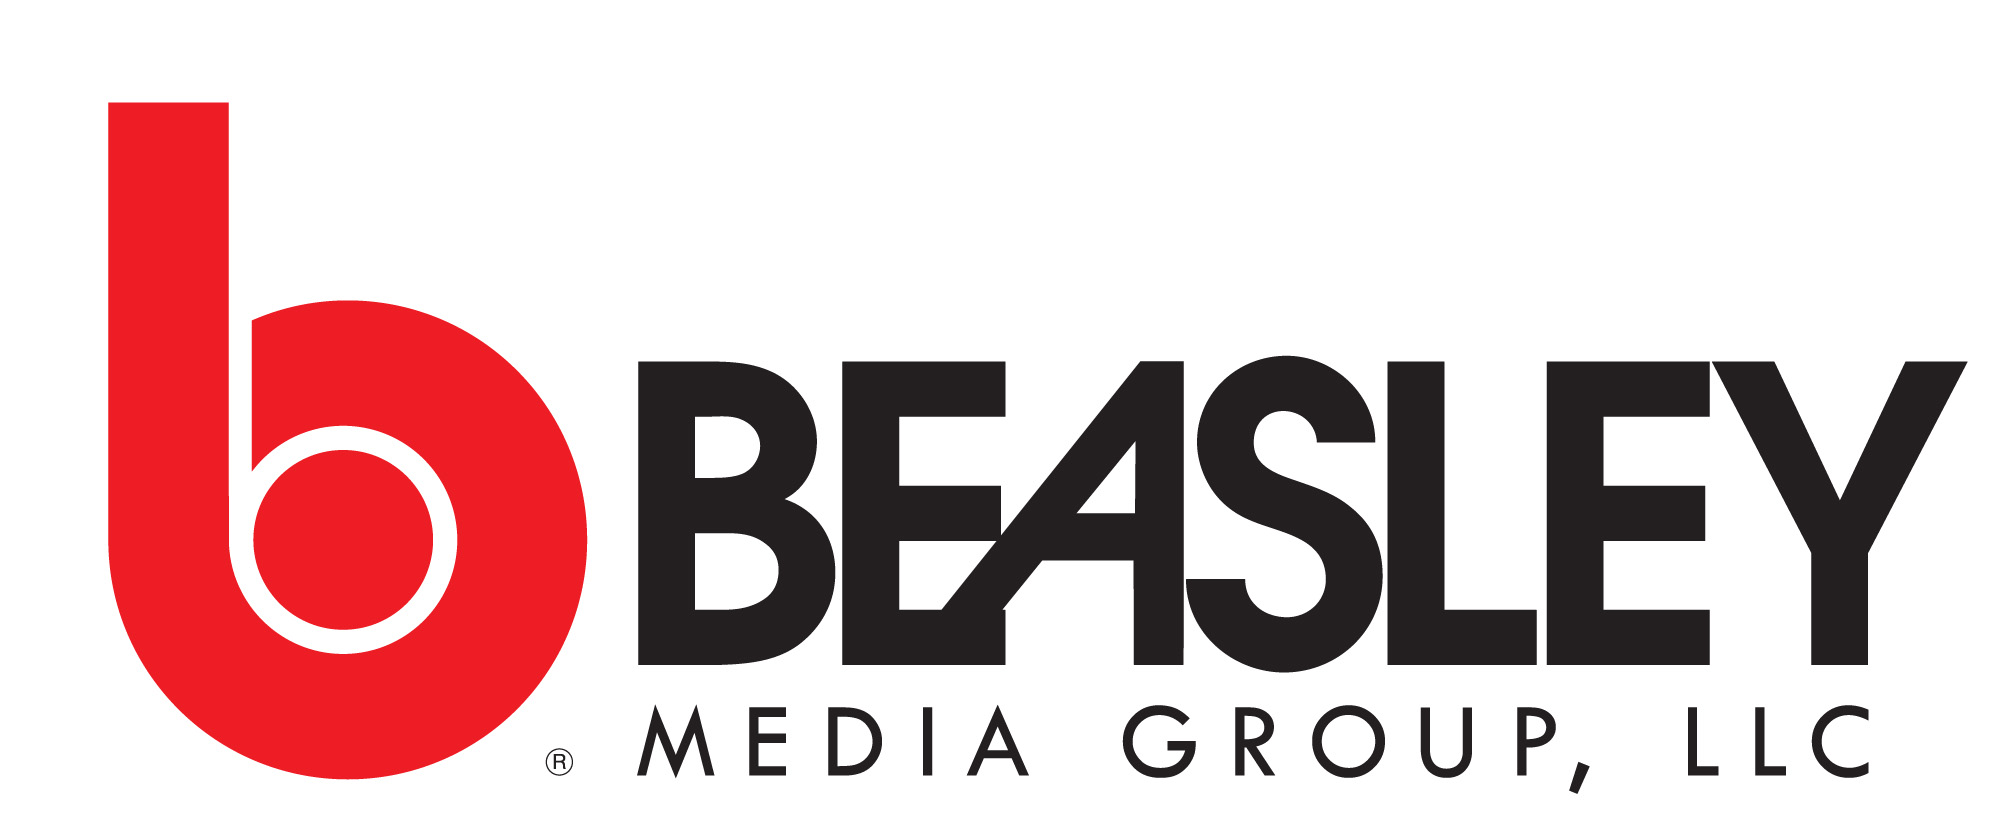 Silver_Beasley Media Group LLC_Logo.jpg